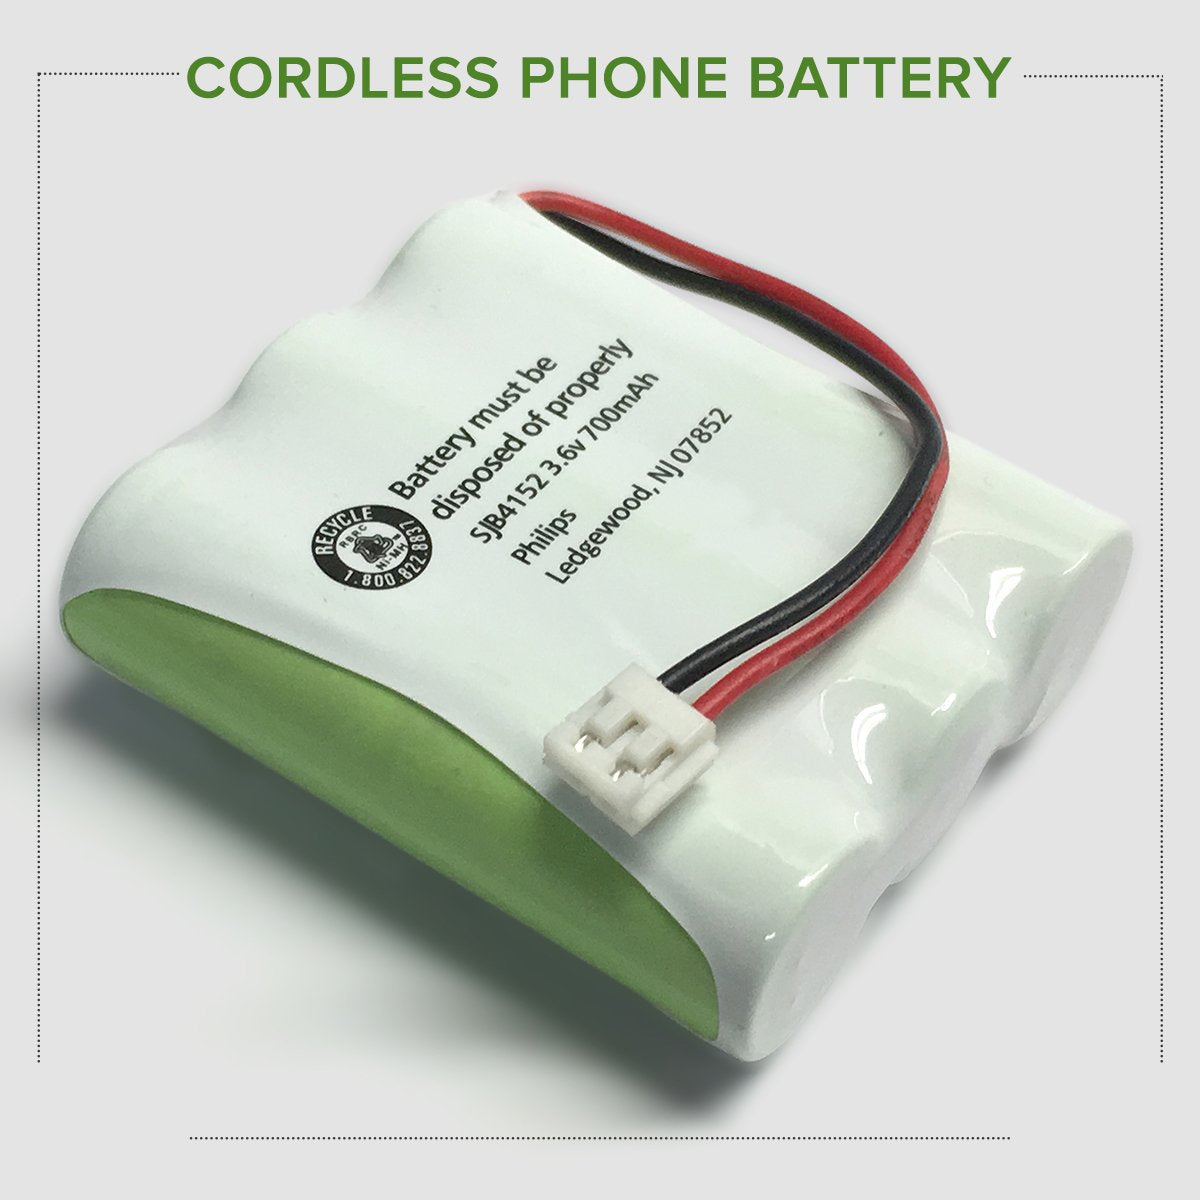 GE 1469767 Cordless Phone Battery